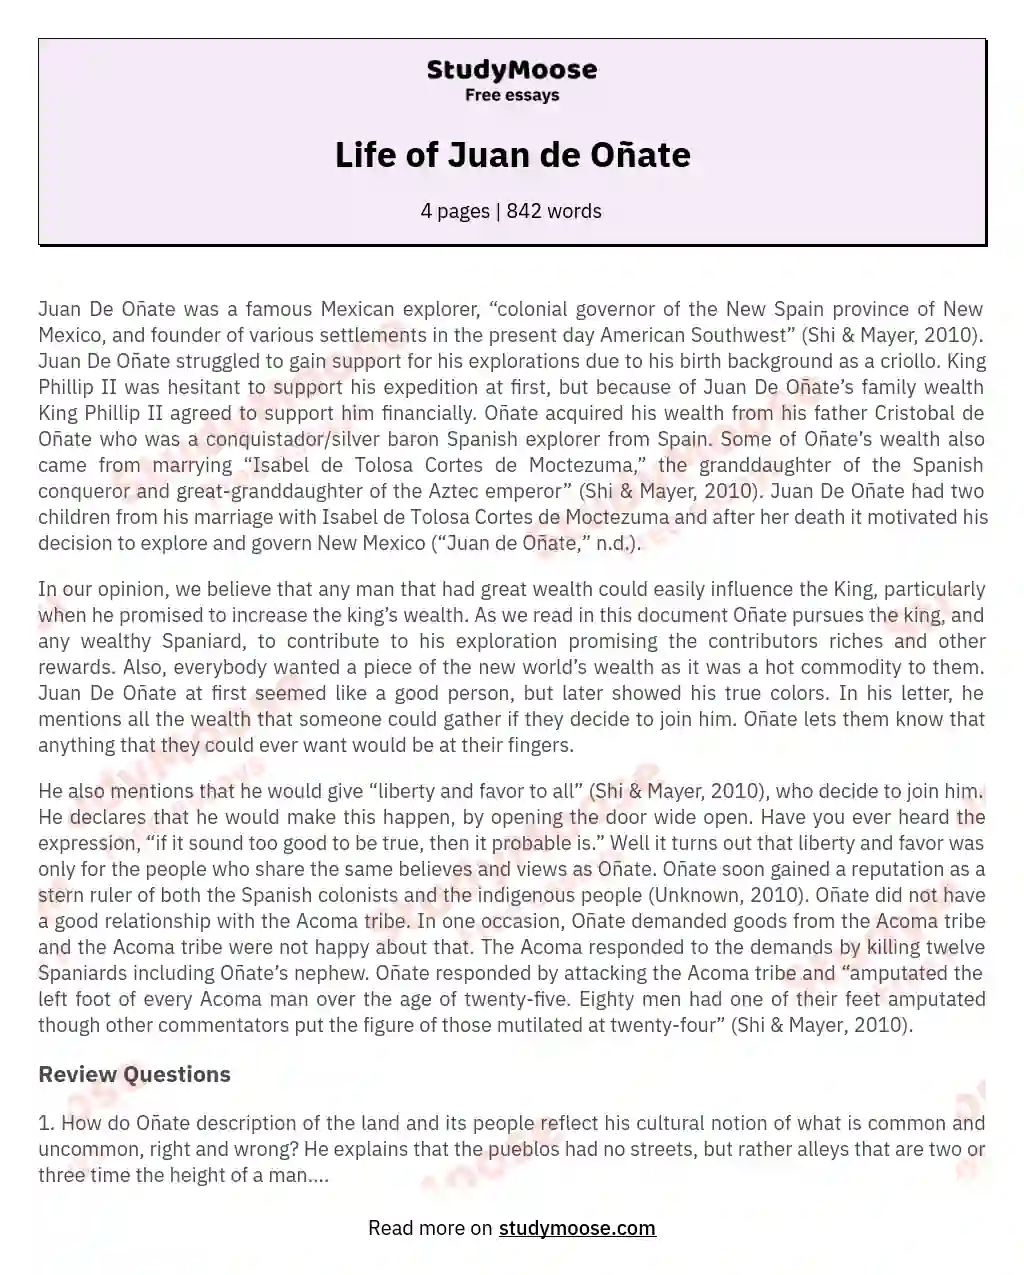 Life of Juan de Oñate essay